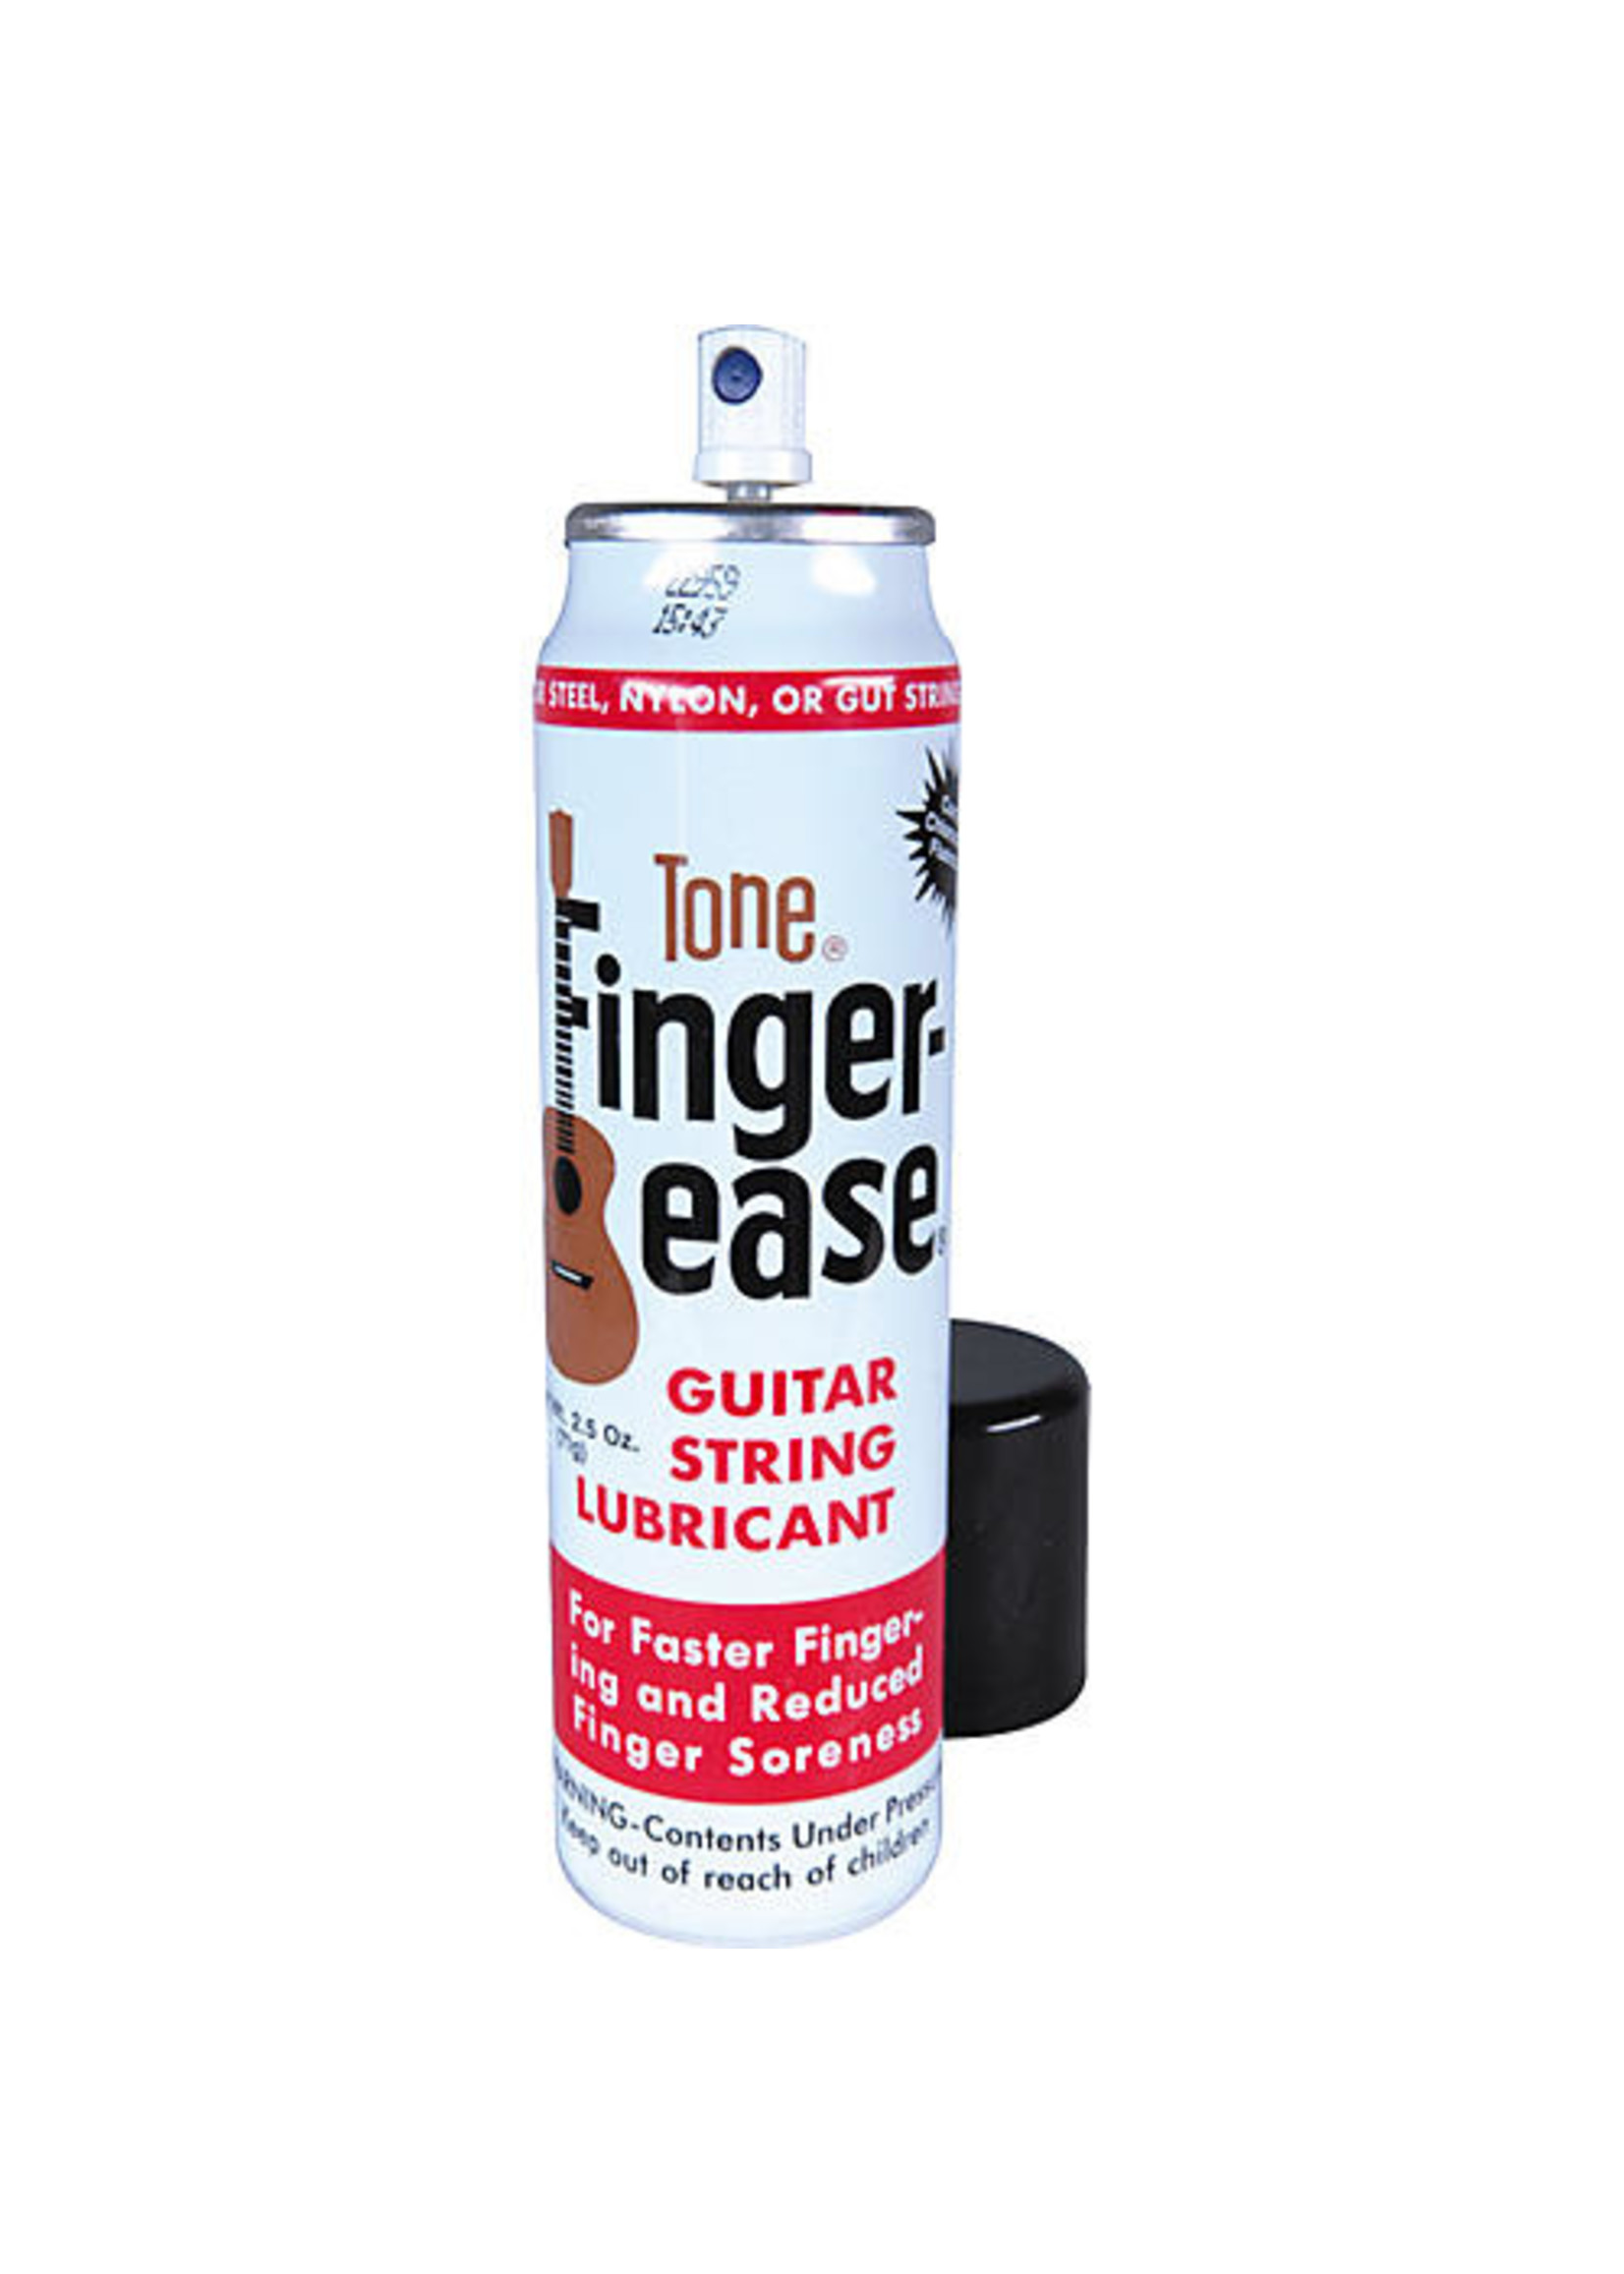 Chem-Pak Fingerease Guitar String Lubricant